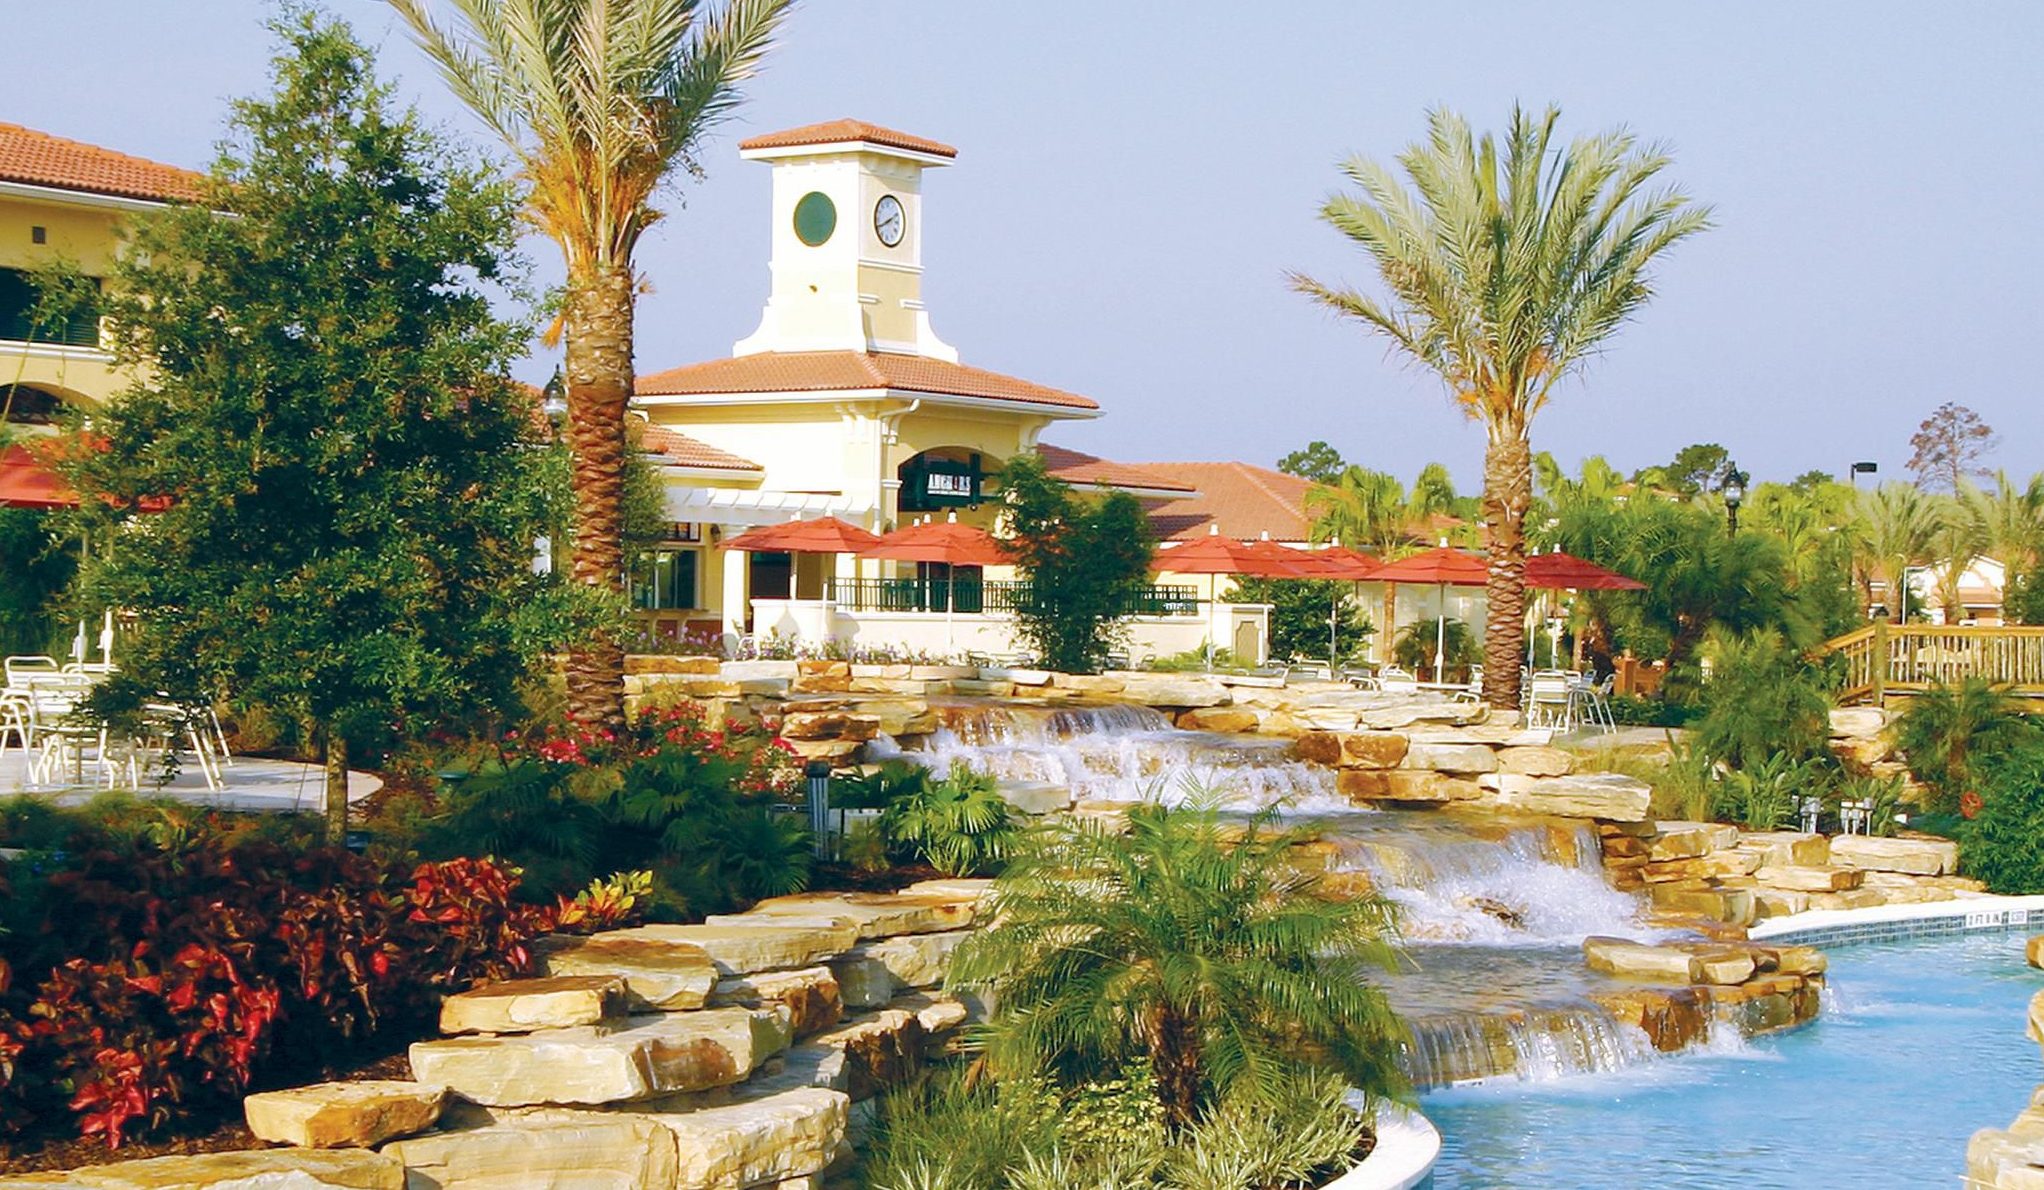 Orlando's Orange Lake Resort: "Apples to oranges"